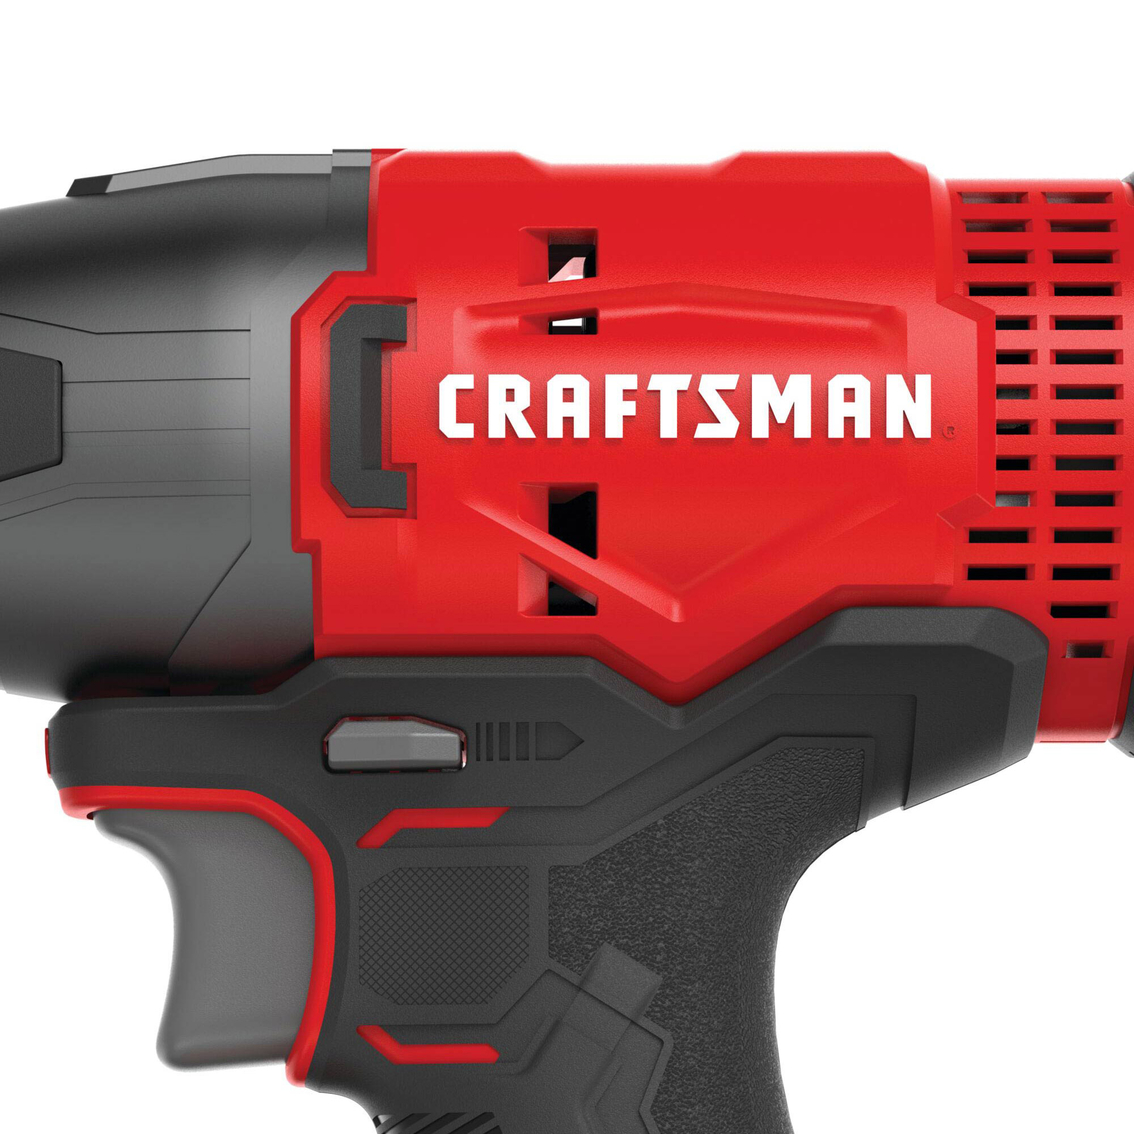 Craftsman 20V Max Cordless 1/4 in. Impact Driver Kit - Image 3 of 6